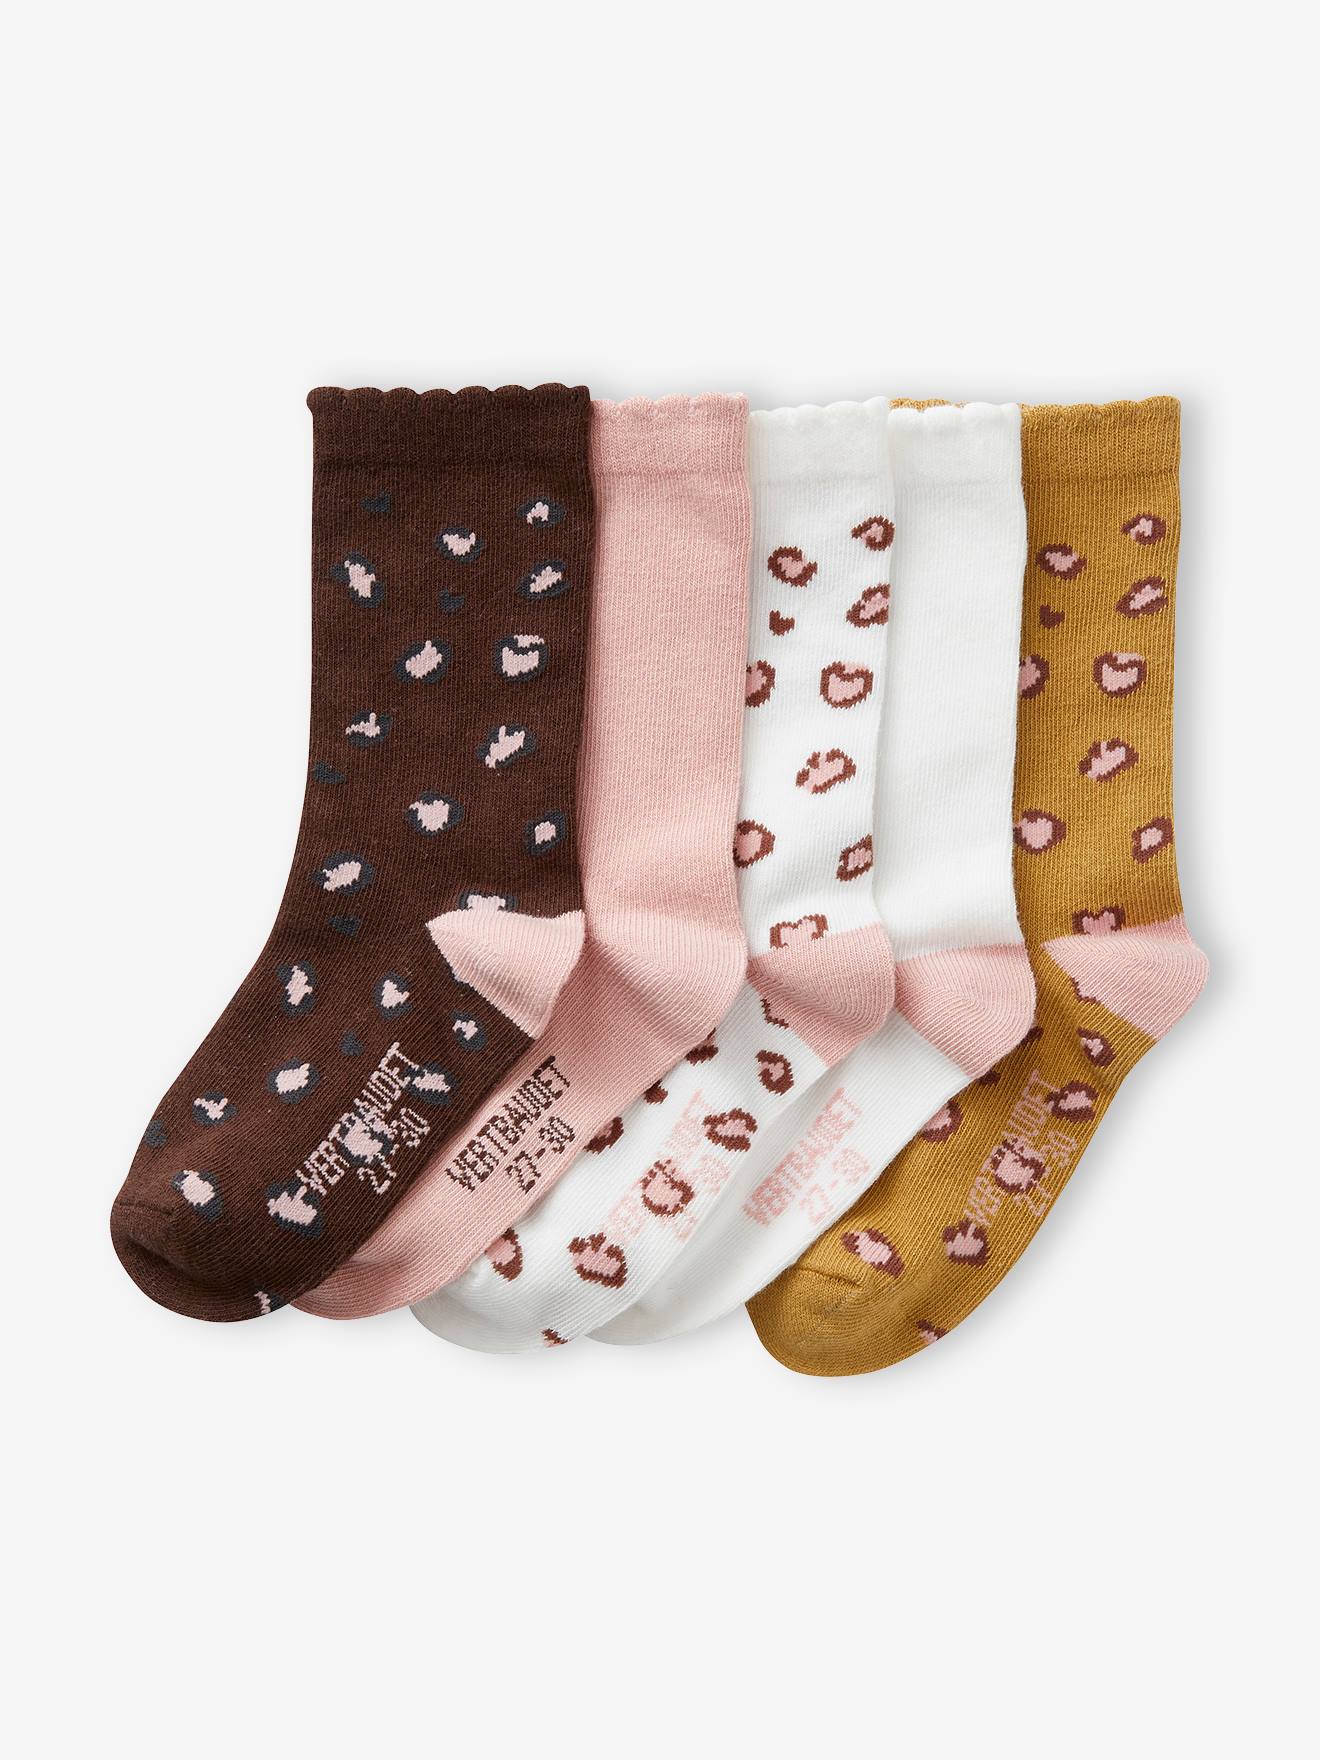 Pack of 5 Pairs of "Wild" Socks for Girls chocolate